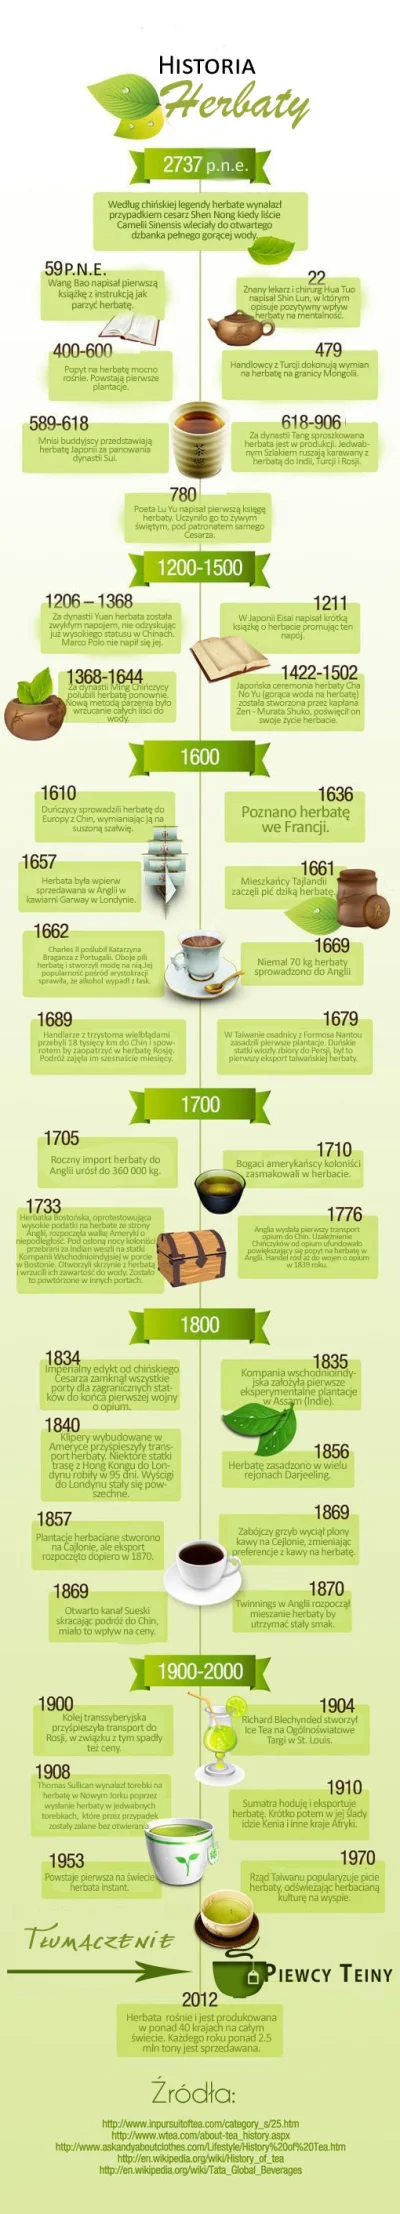 Nemezja - #infografika #herbata #ciekawostki #historiaherbatywpigulce #herbaciarnia 
...